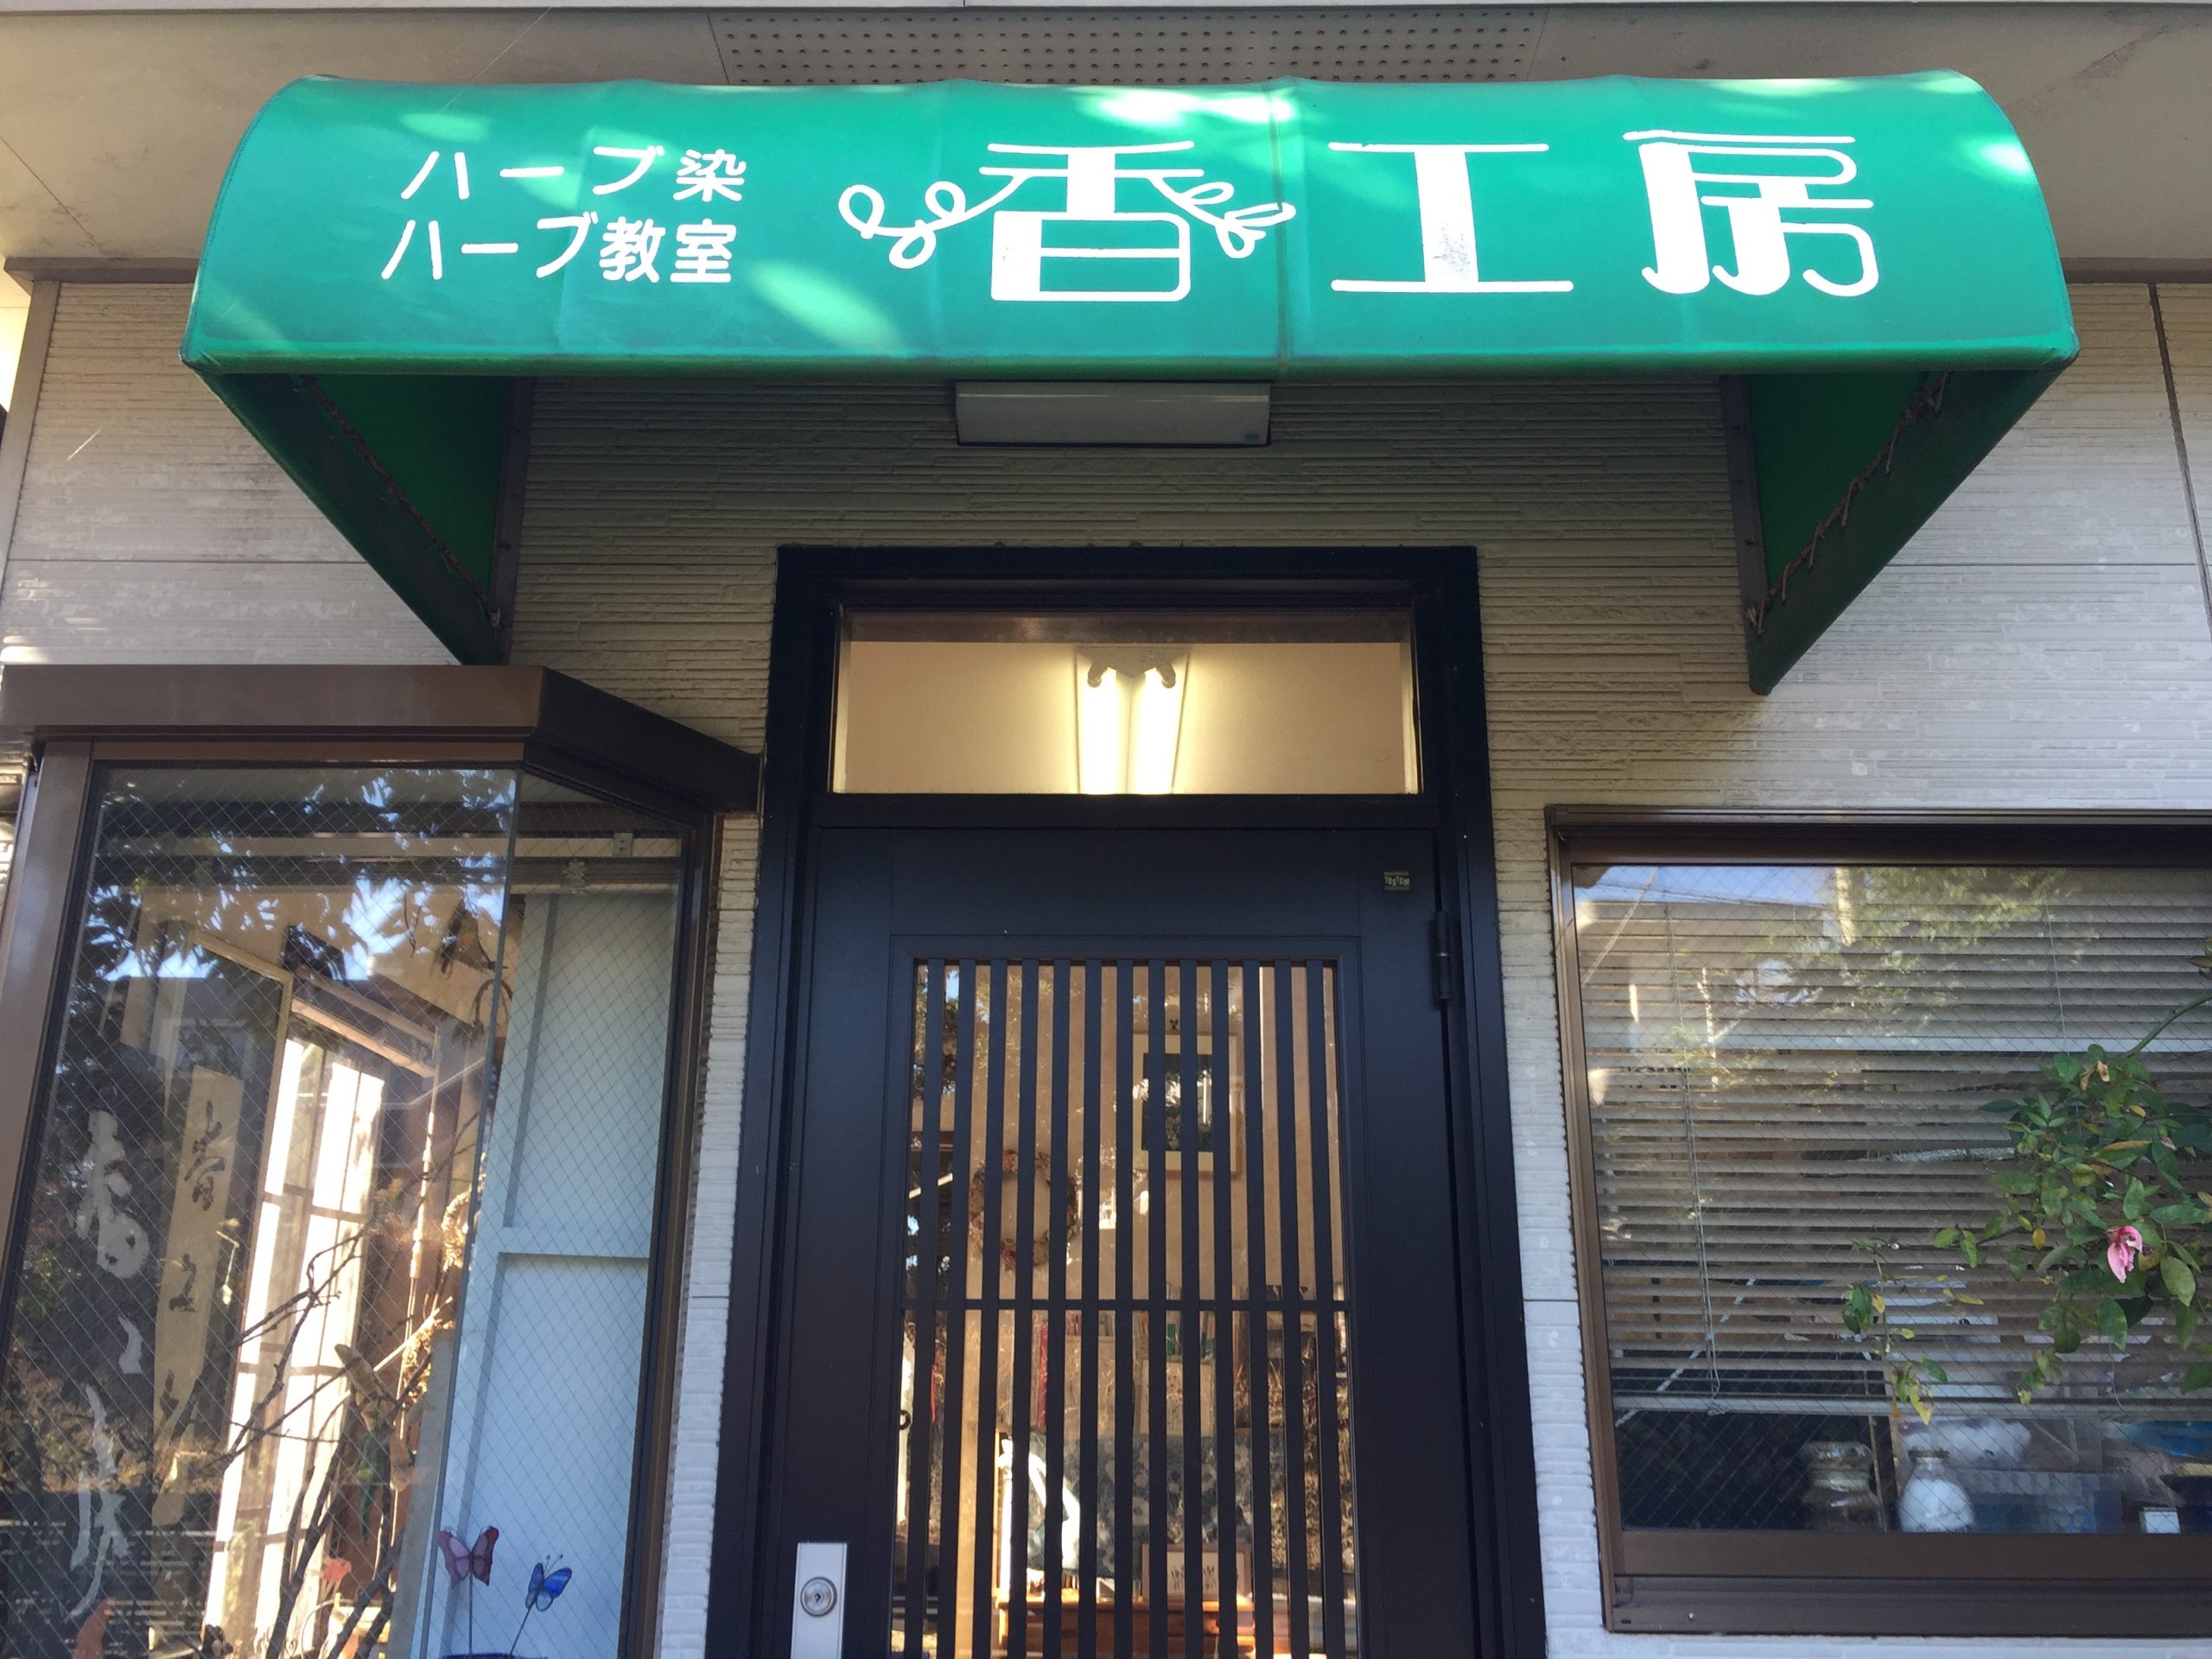 IMG 3519 scaled - 【WEB】佐倉市「手作りの店 和楽堂」さま